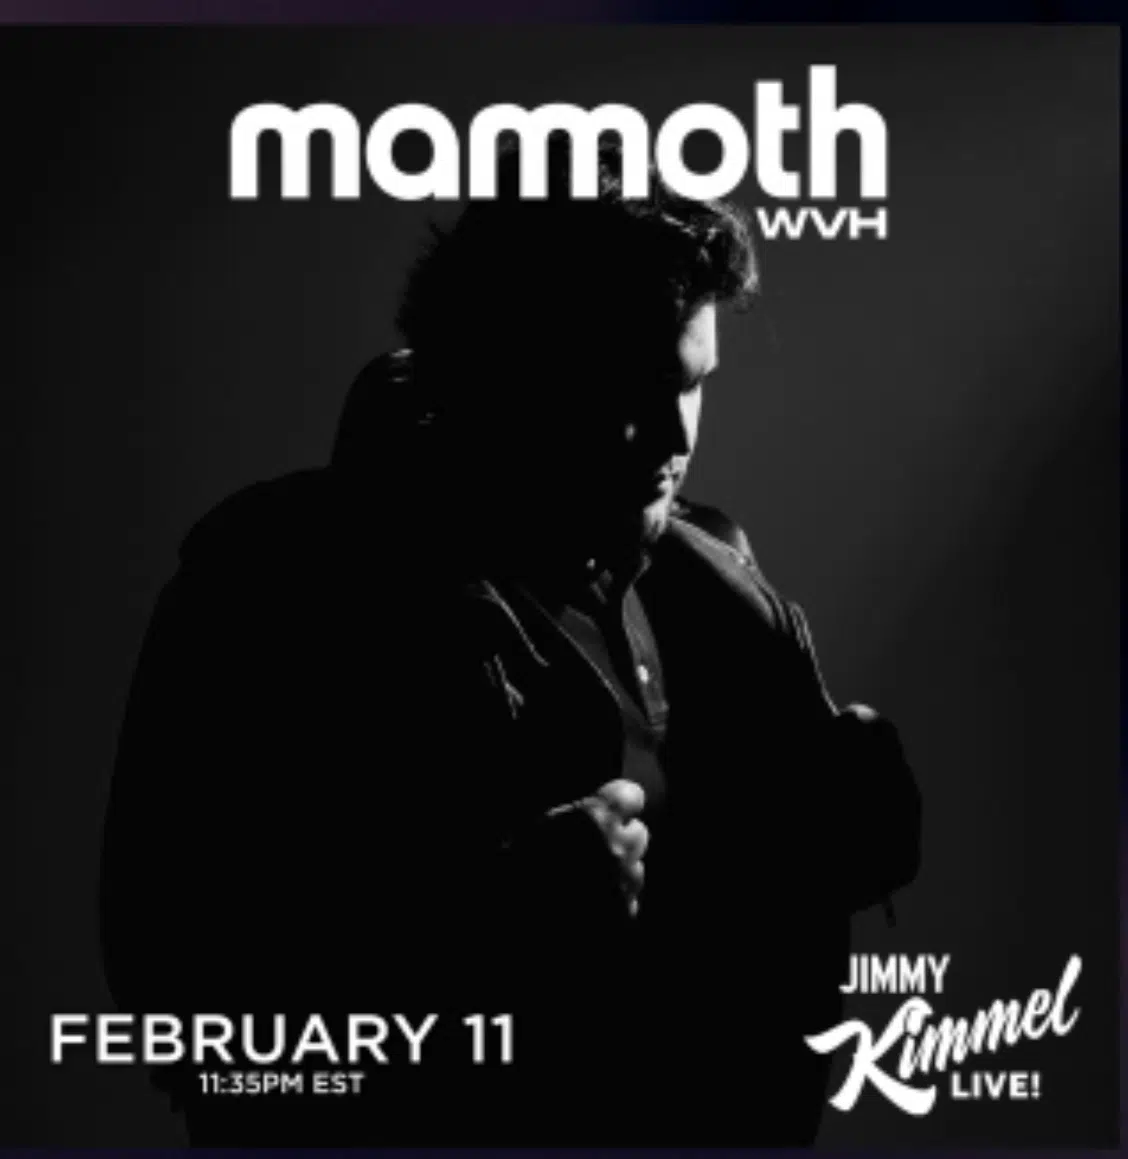 Mammoth set live TV debut